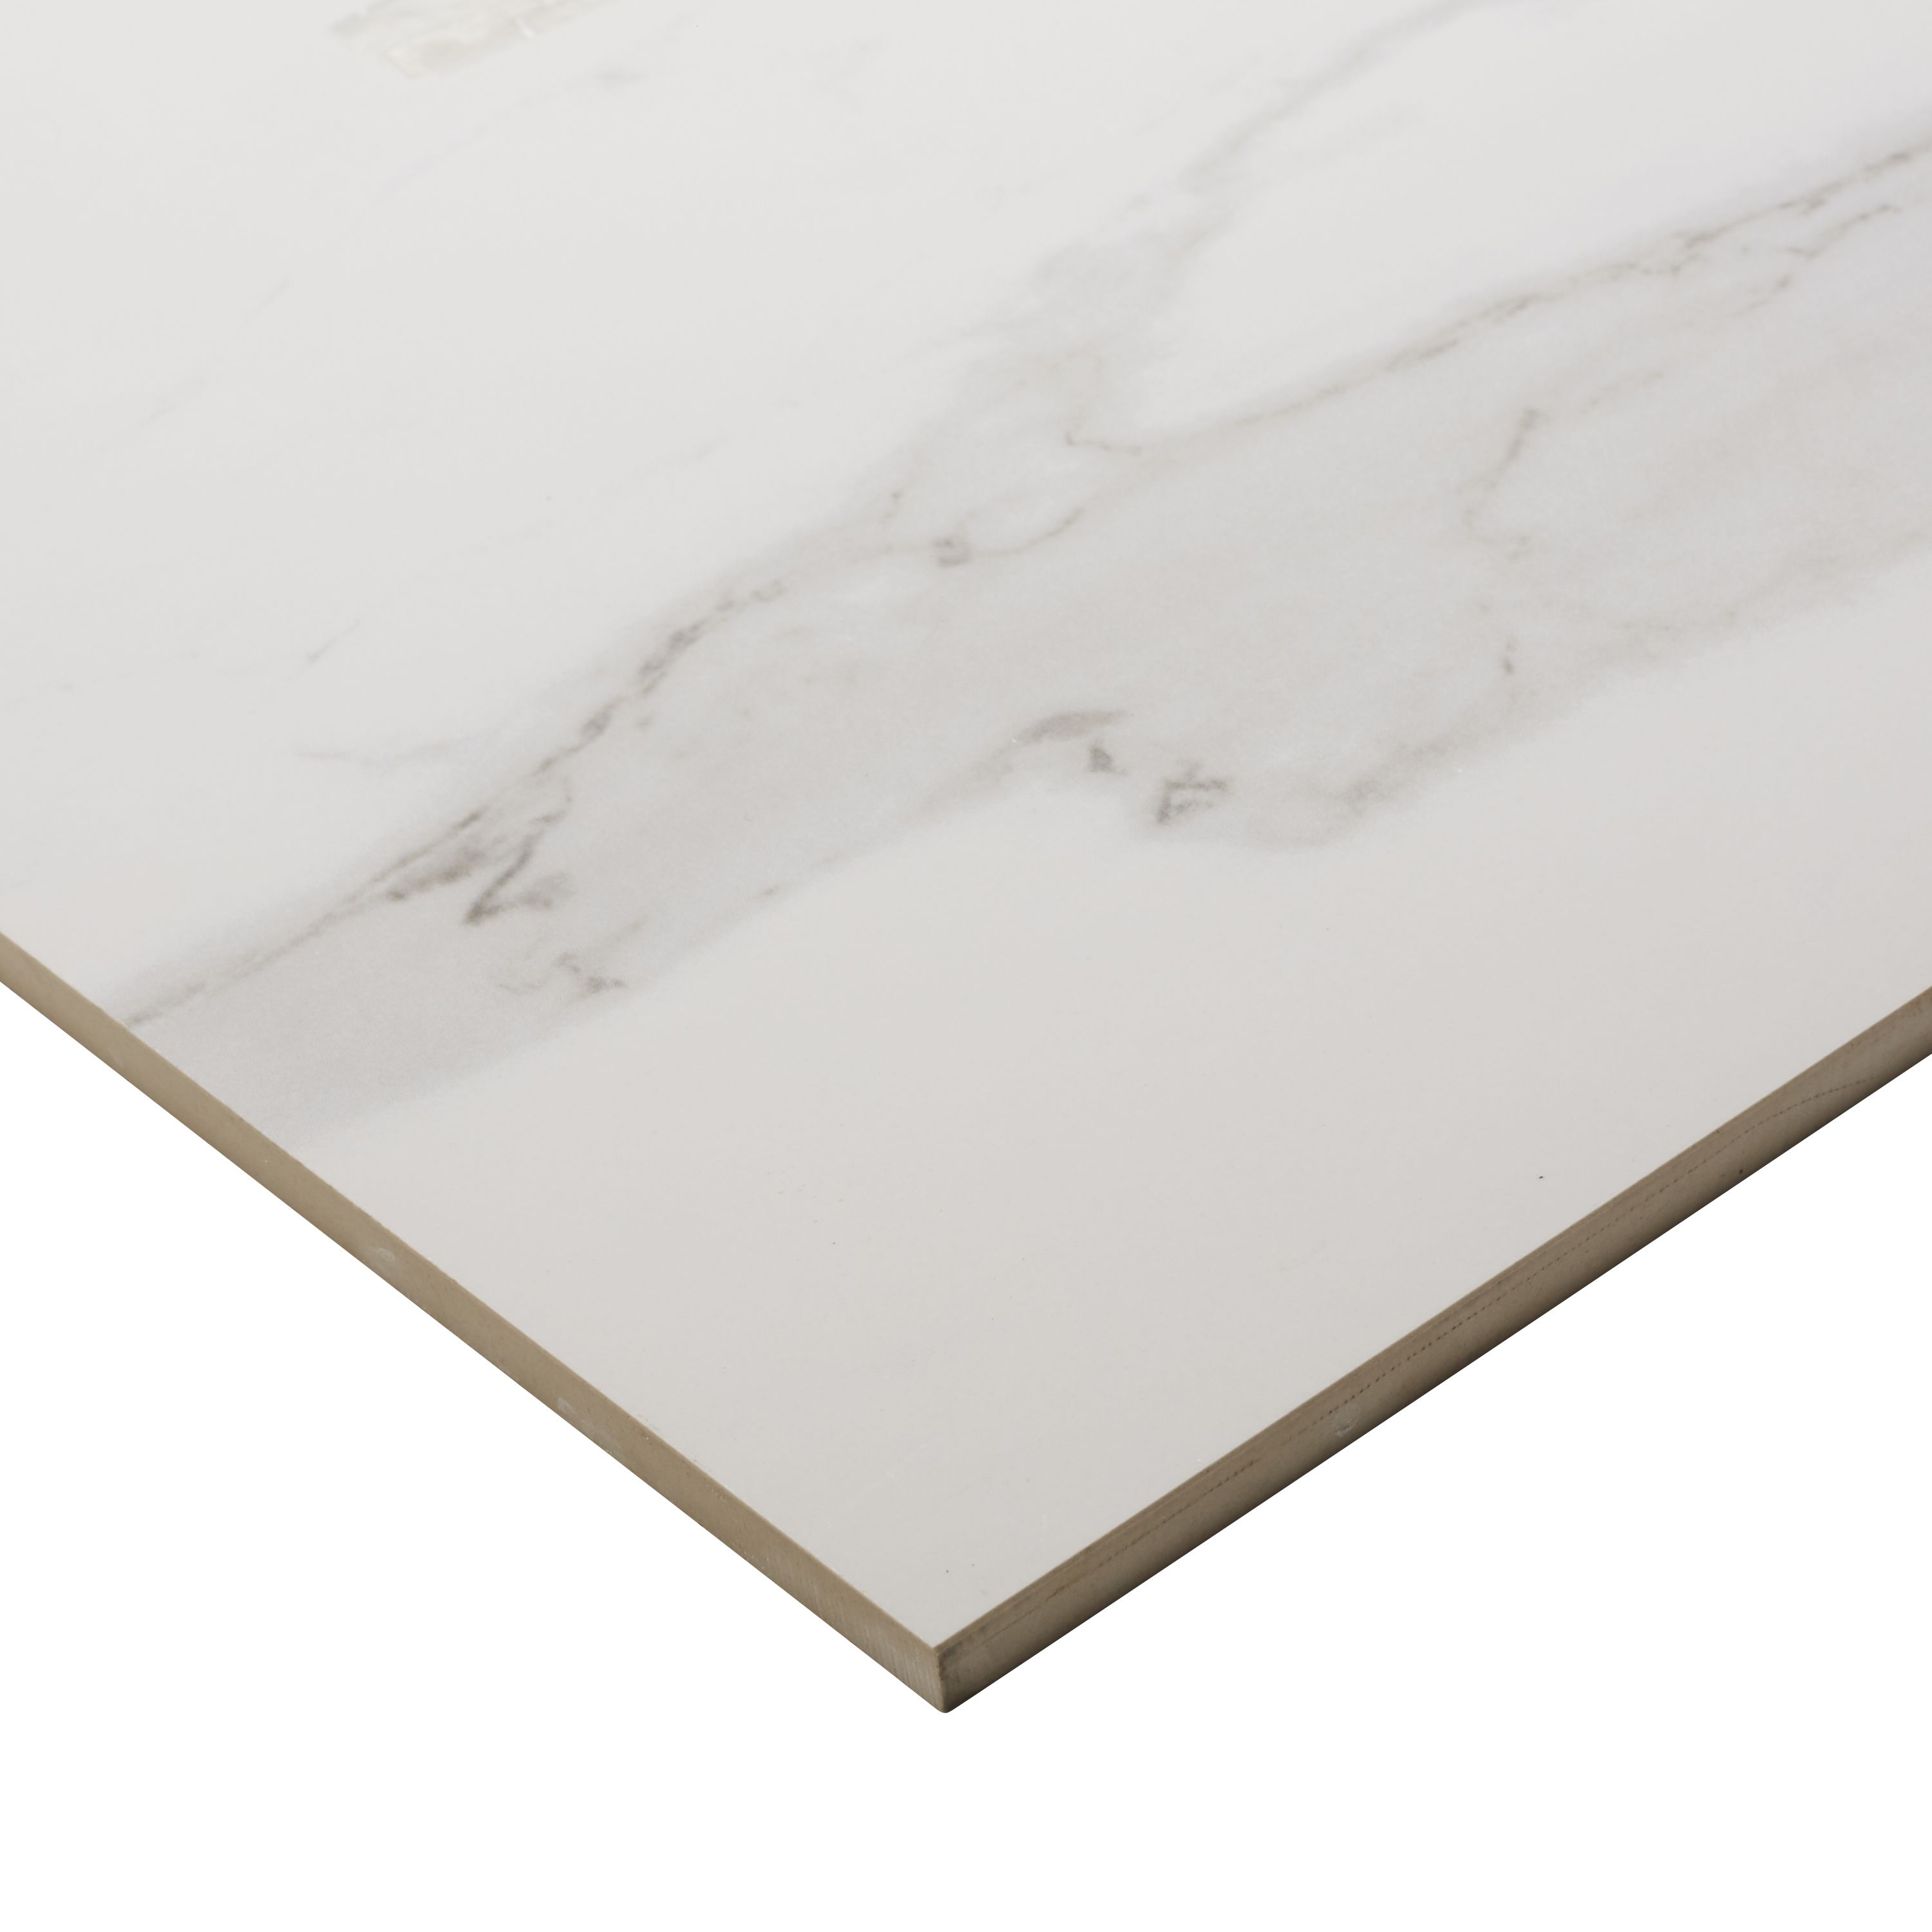 Ultimate White Semi-polished Marble effect Porcelain Floor Tile Sample